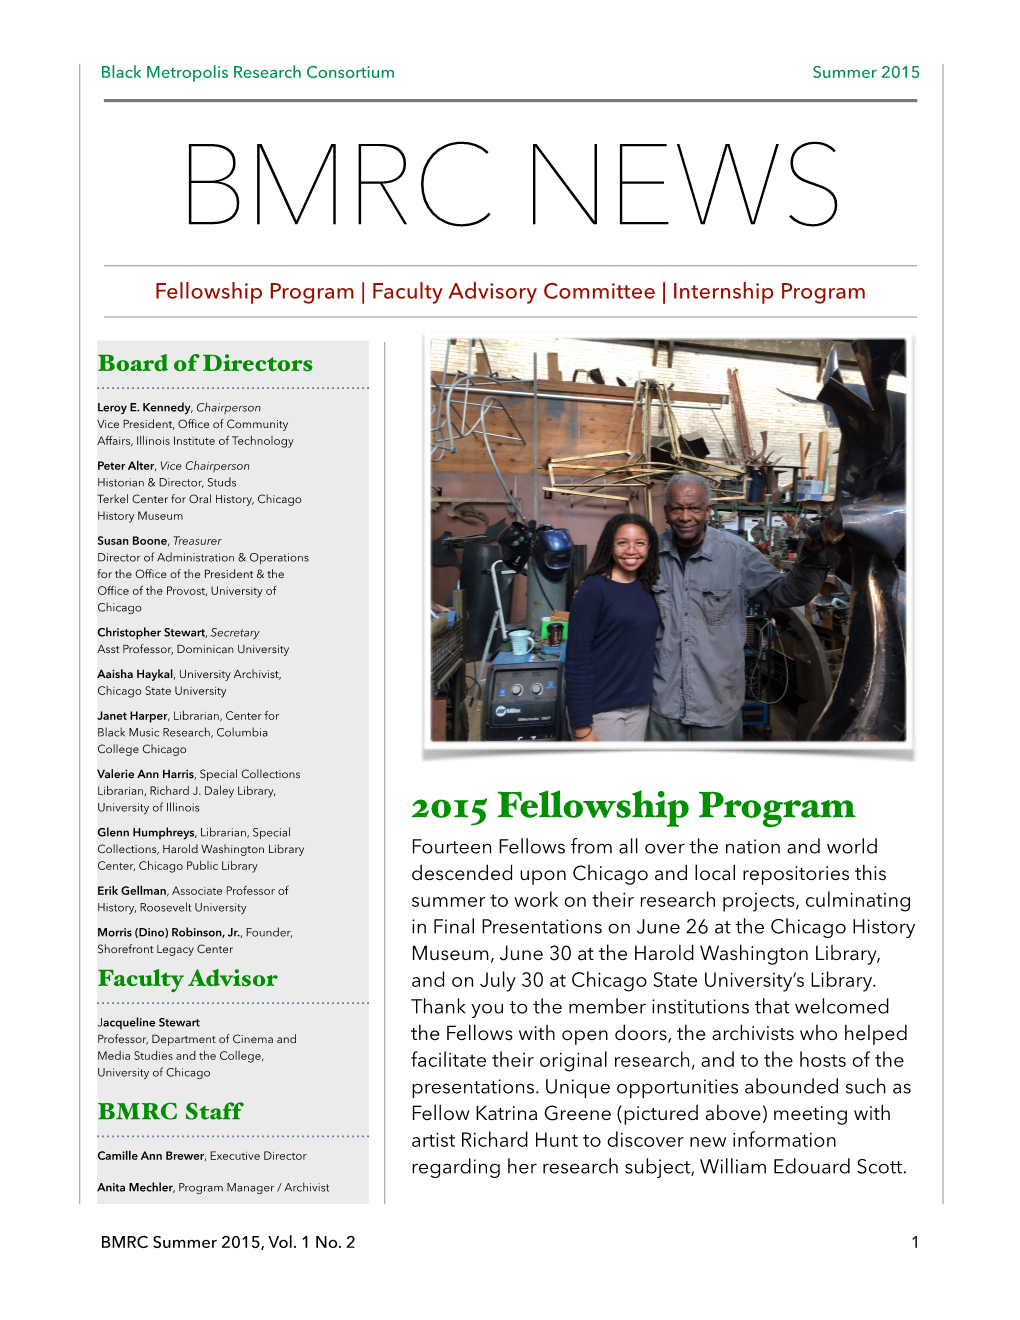 BMRC Summer 2015 Newsletter